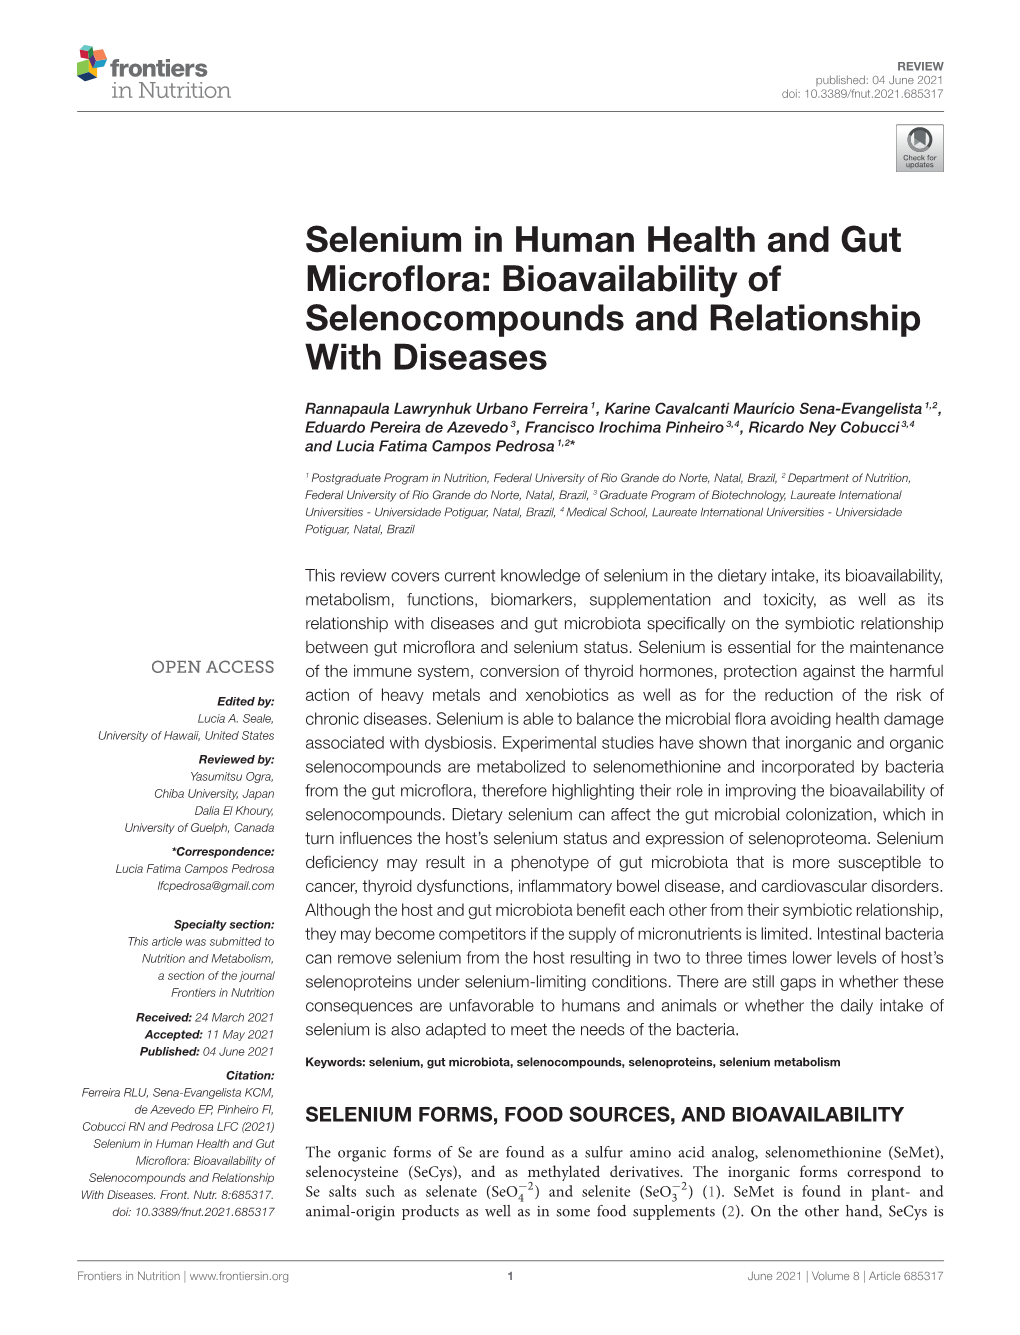 Selenium in Human Health and Gut Microflora